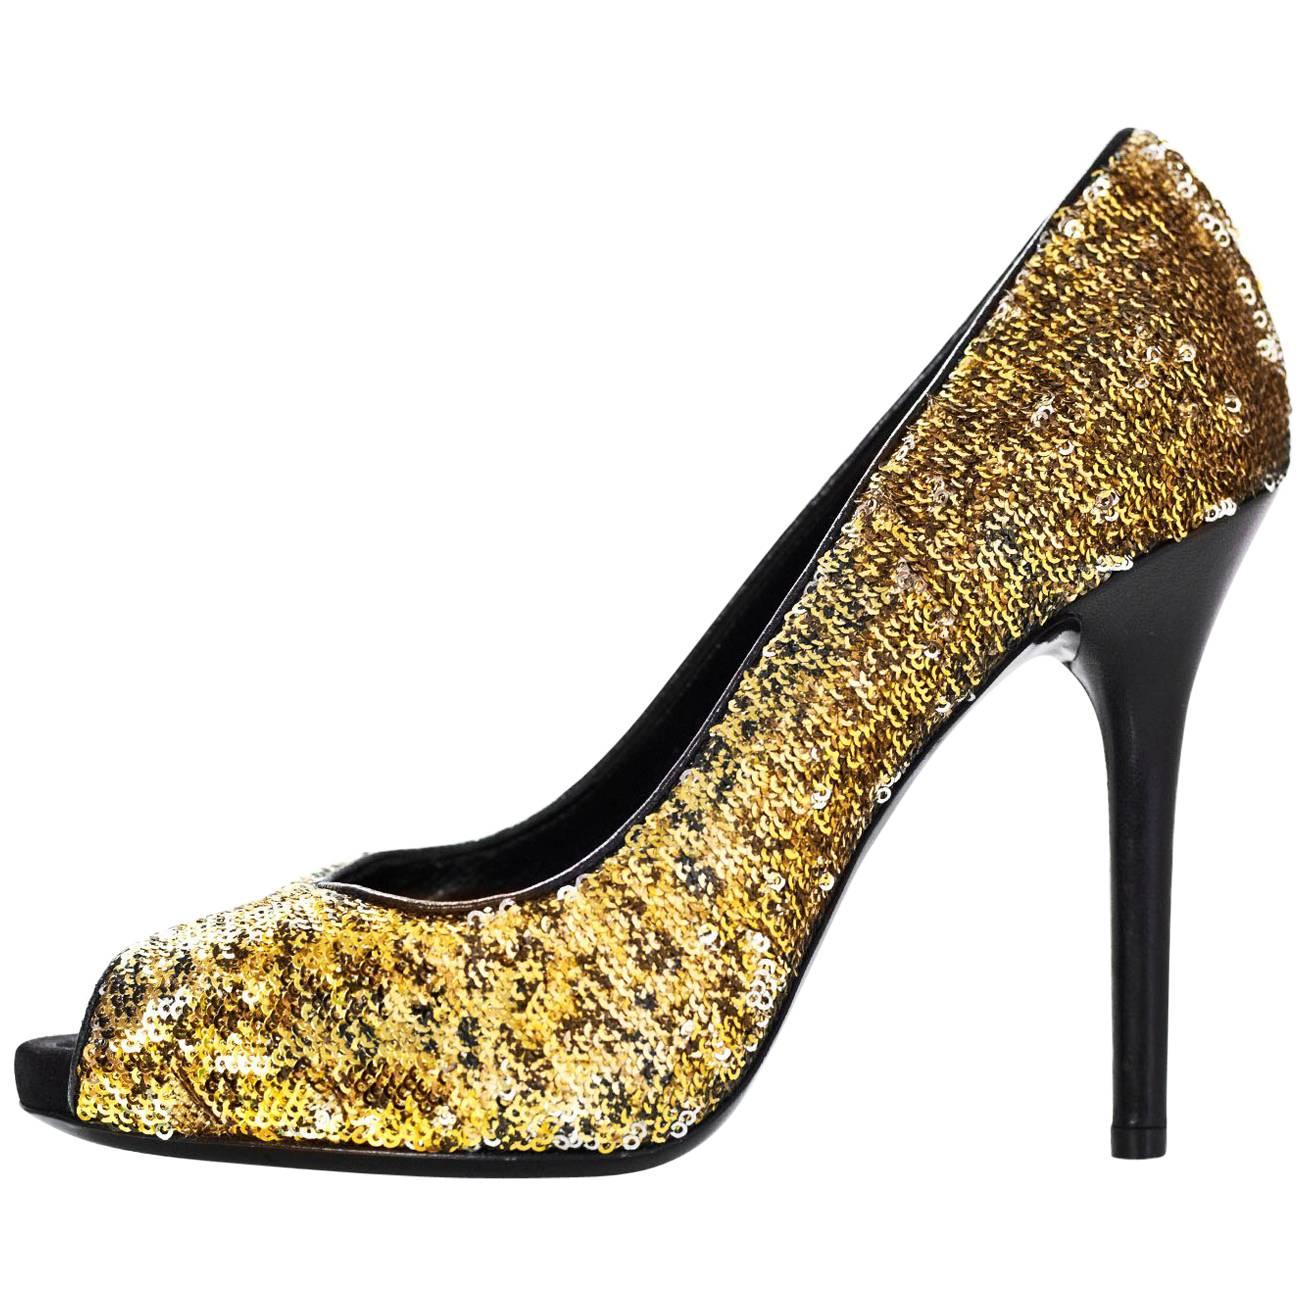 D&G Dolce & Gabbana Gold Sequin Pee-Toe Pumps Size 38